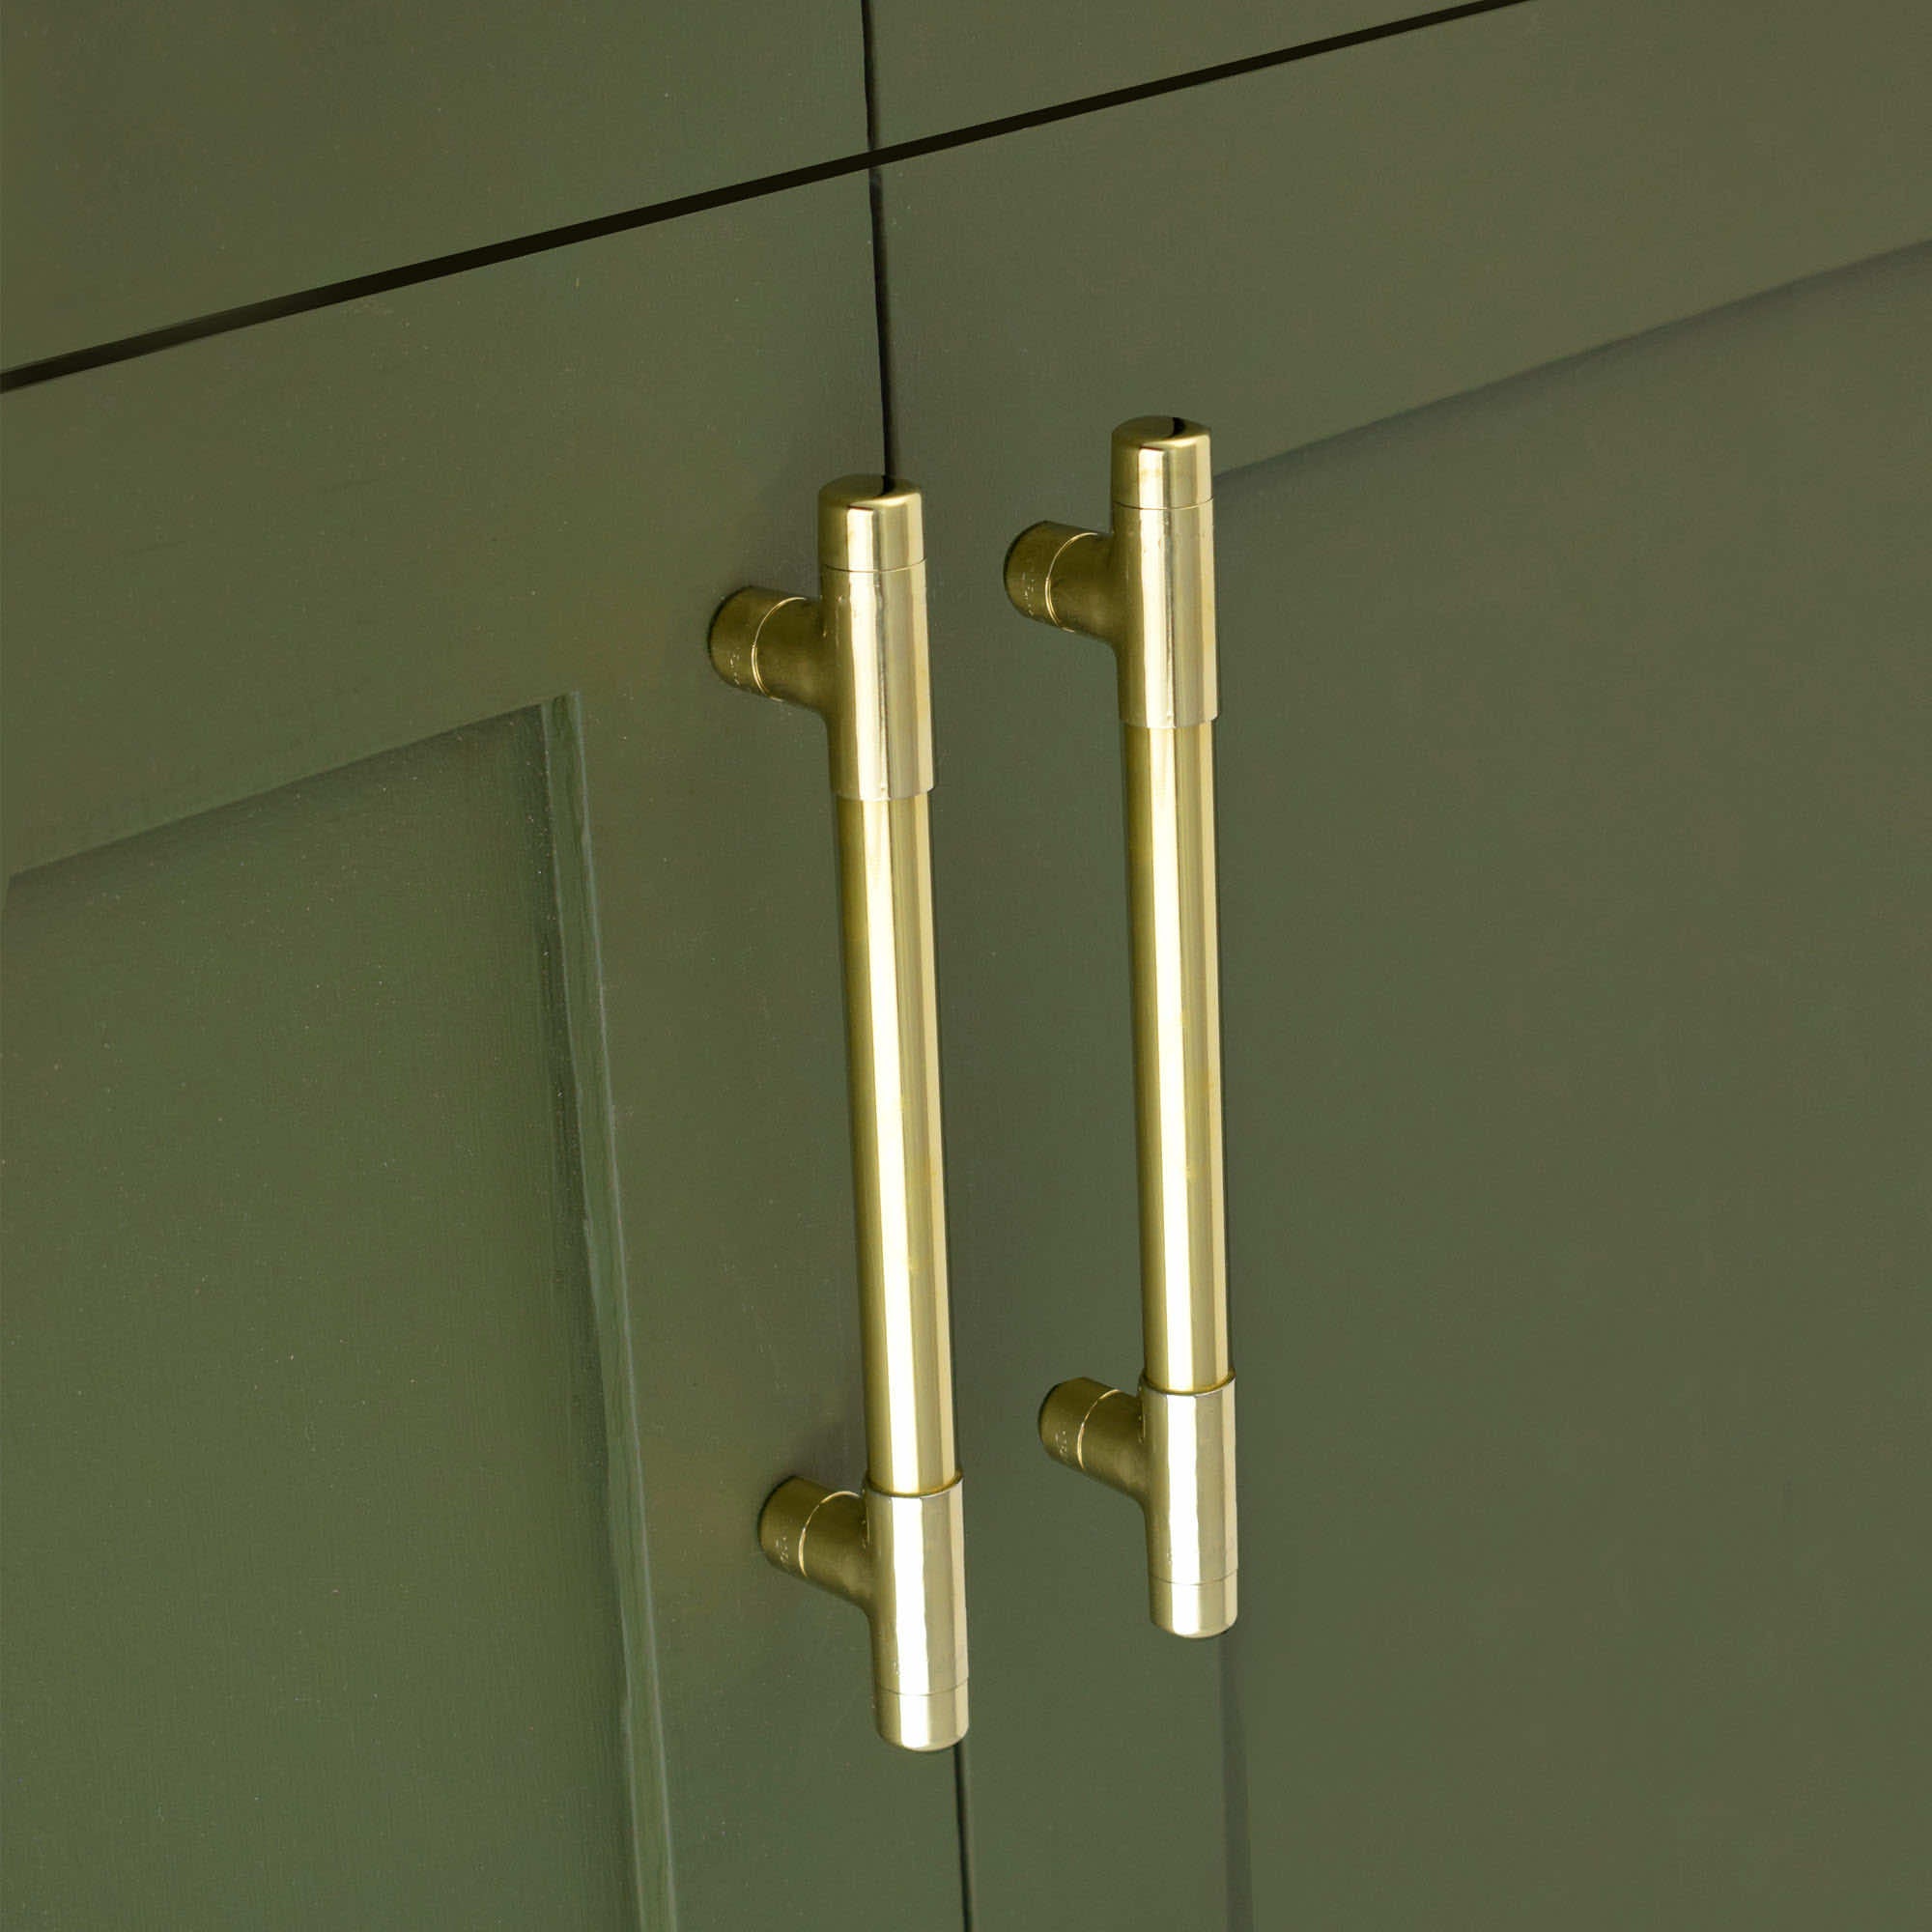 brass handle, classic brass modern pull, polished brass handles, ironmongery